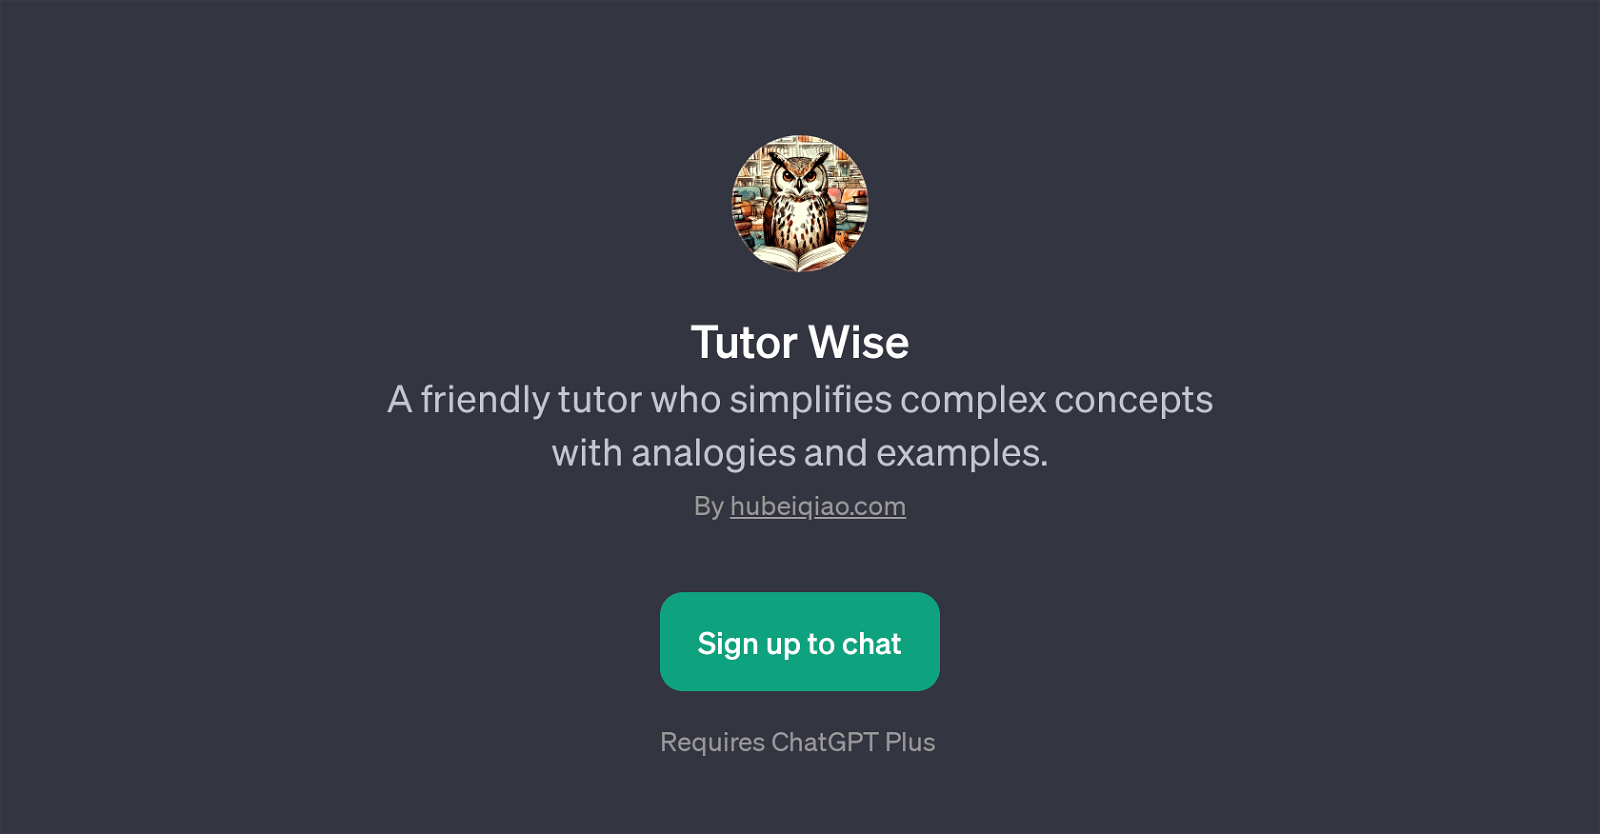 Tutor Wise website